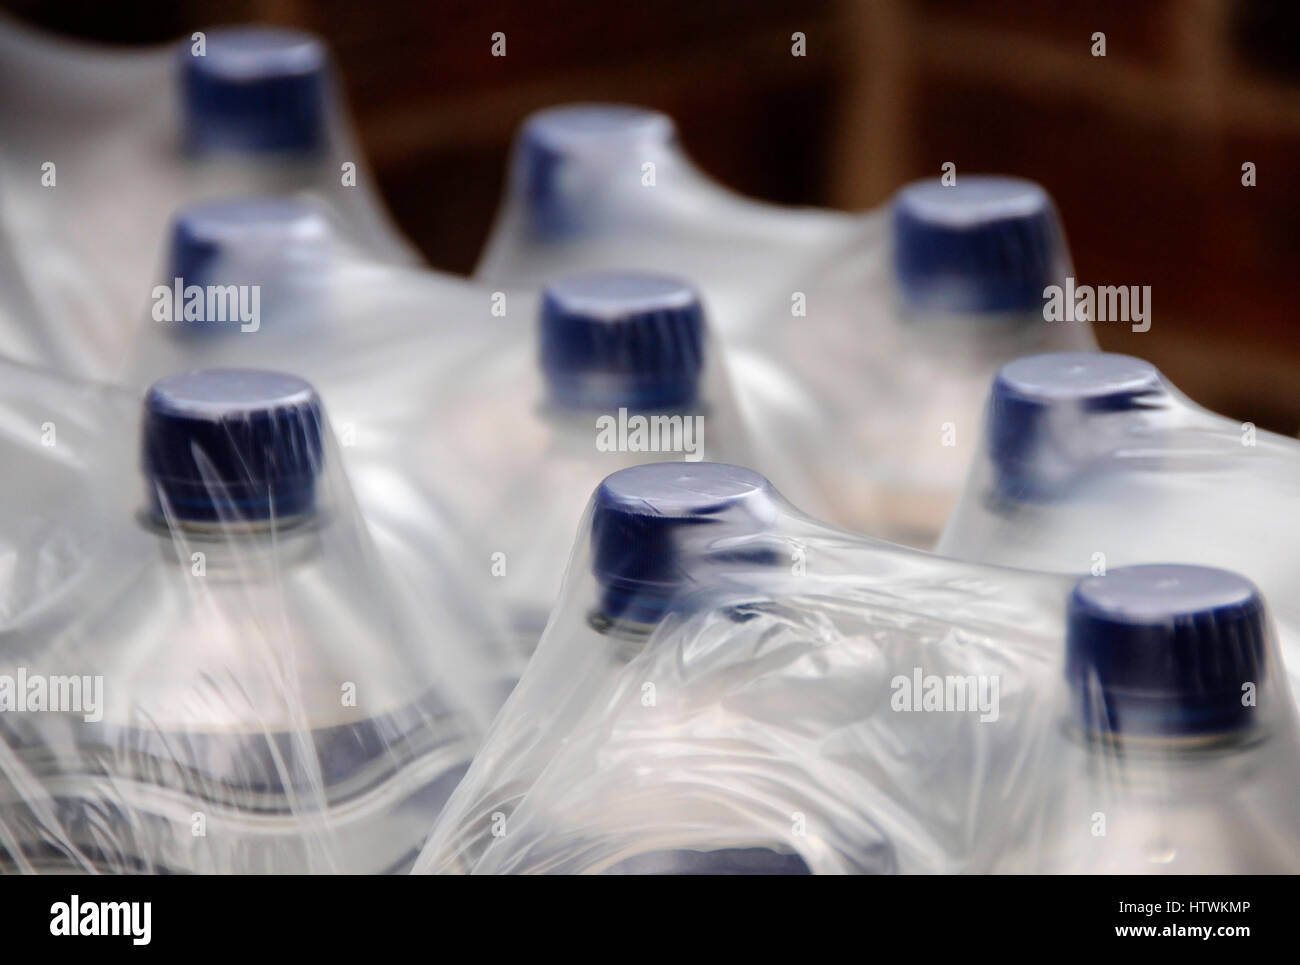 bottled water Stock Photo